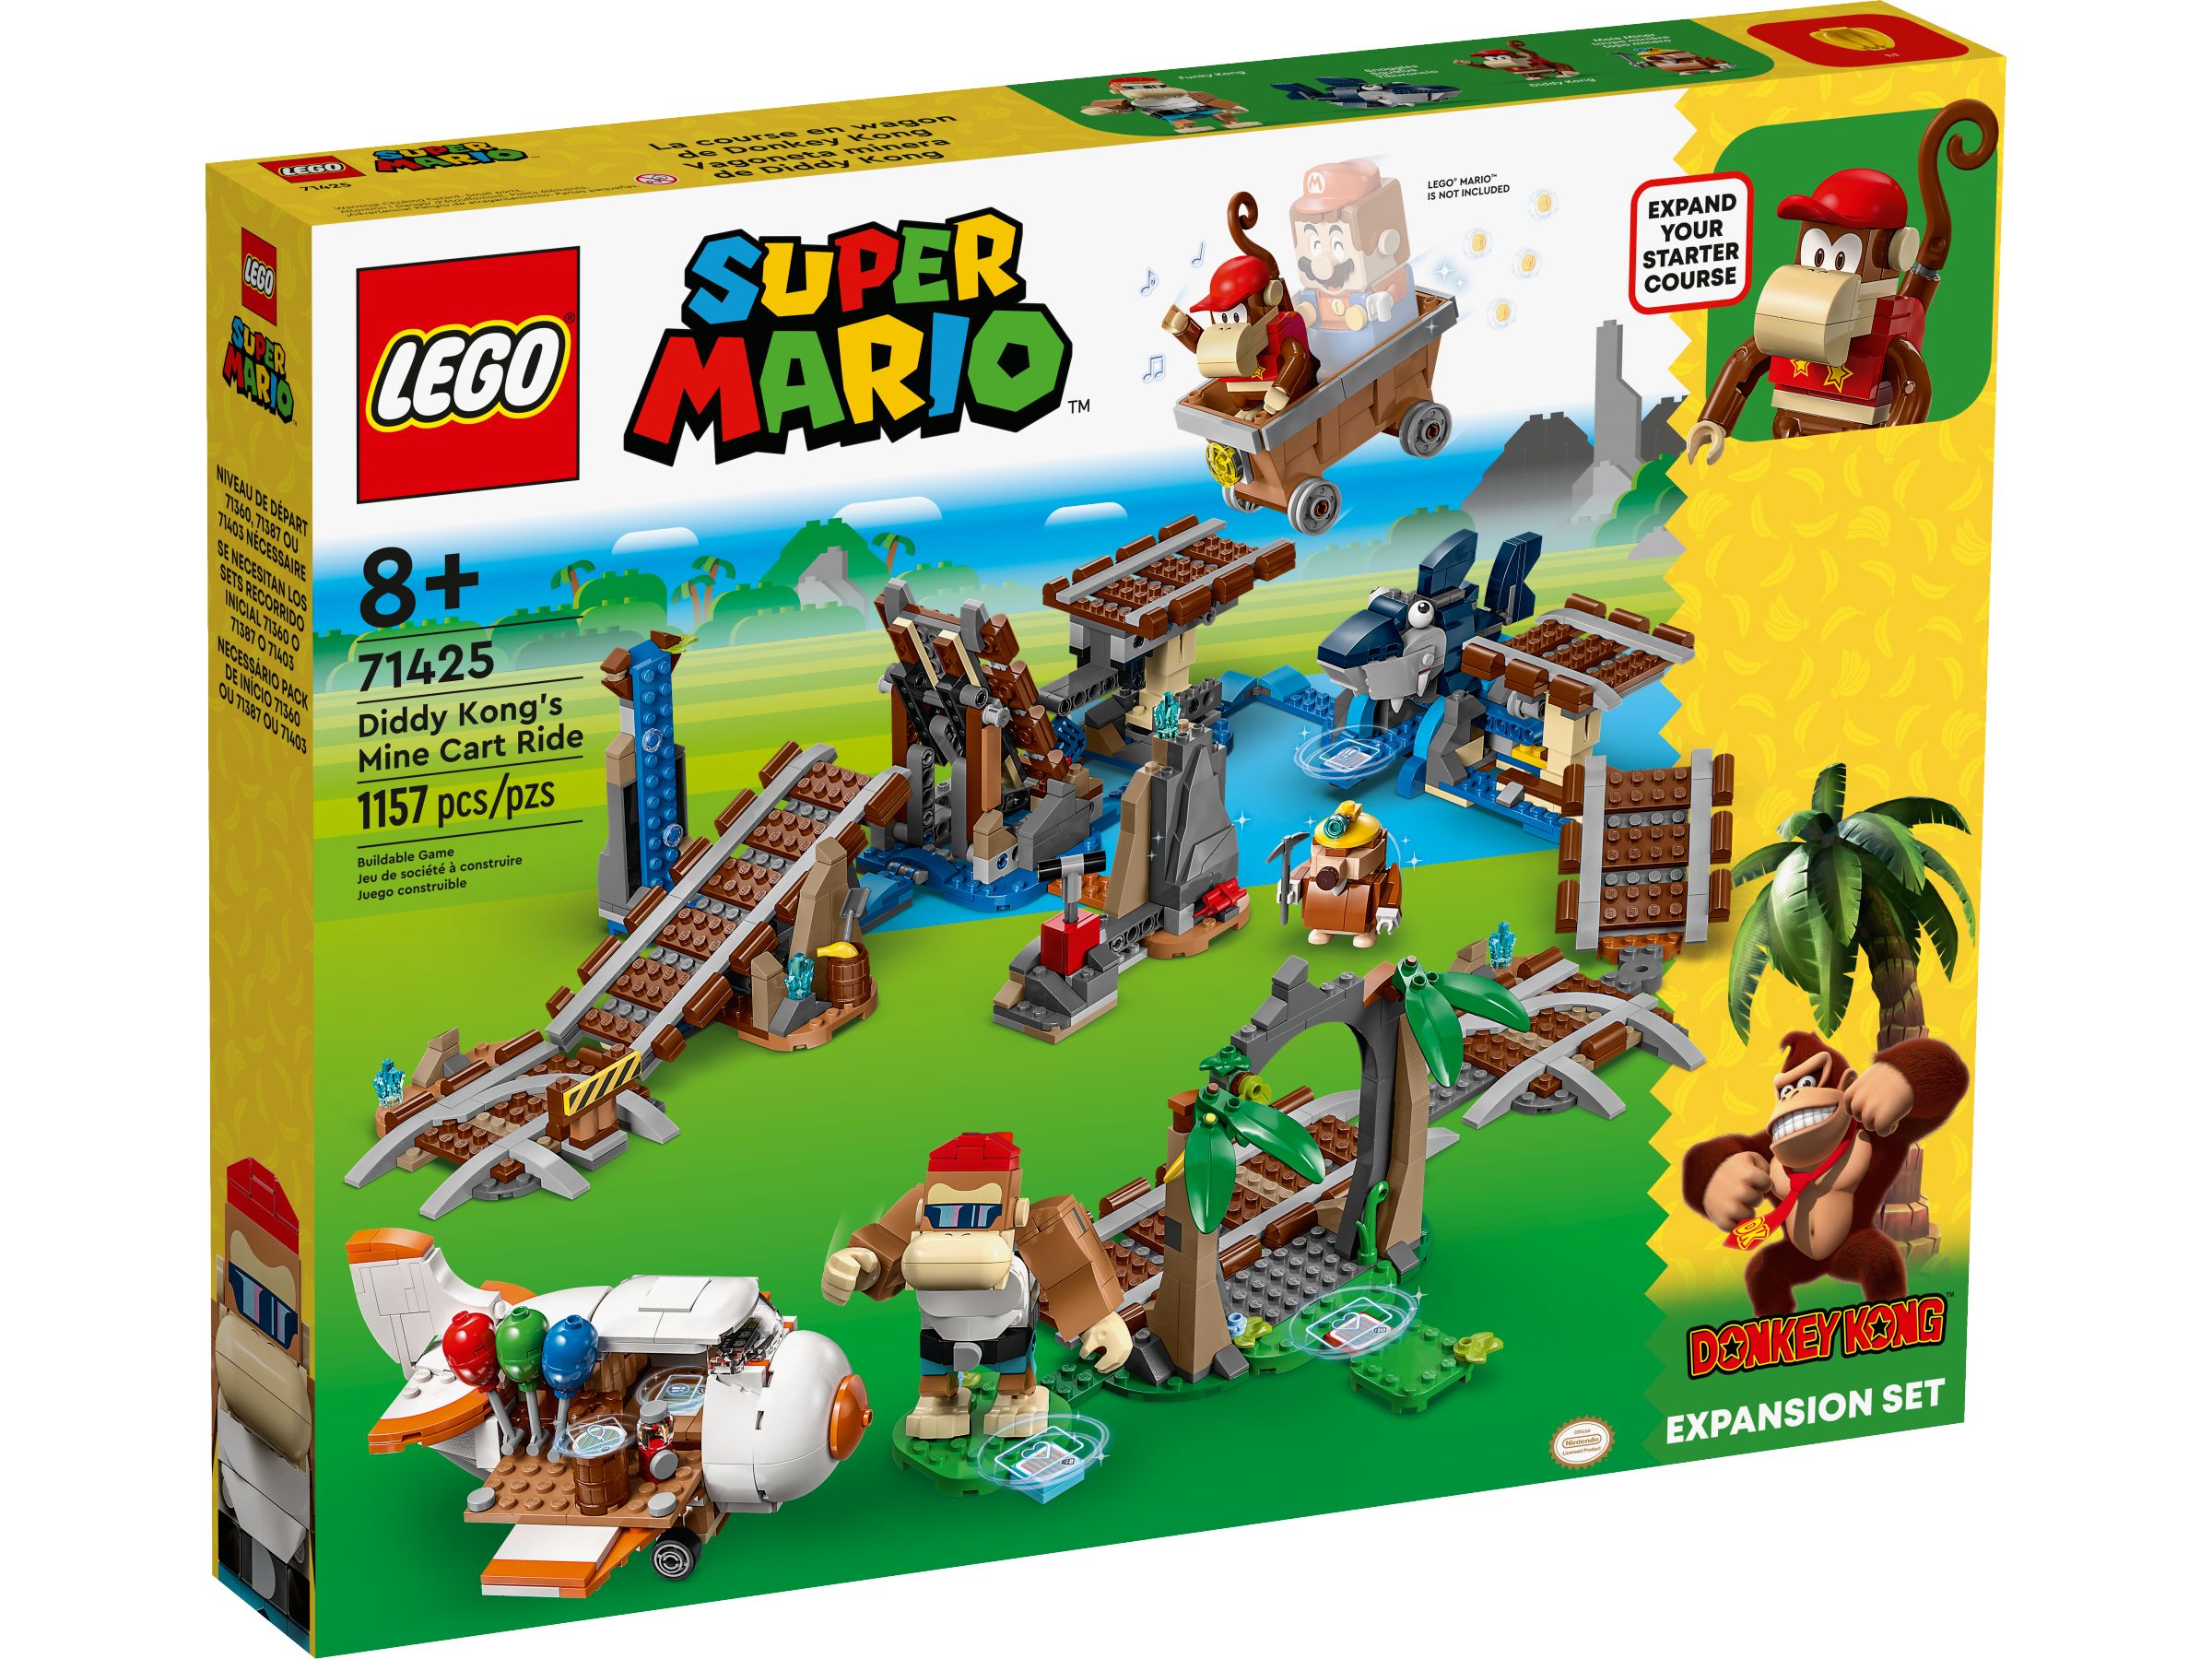 LEGO Super Mario 71425 Diddy Kongs Lorenritt – Erweiterungsset LEGO_71425_Box1_v39.jpg